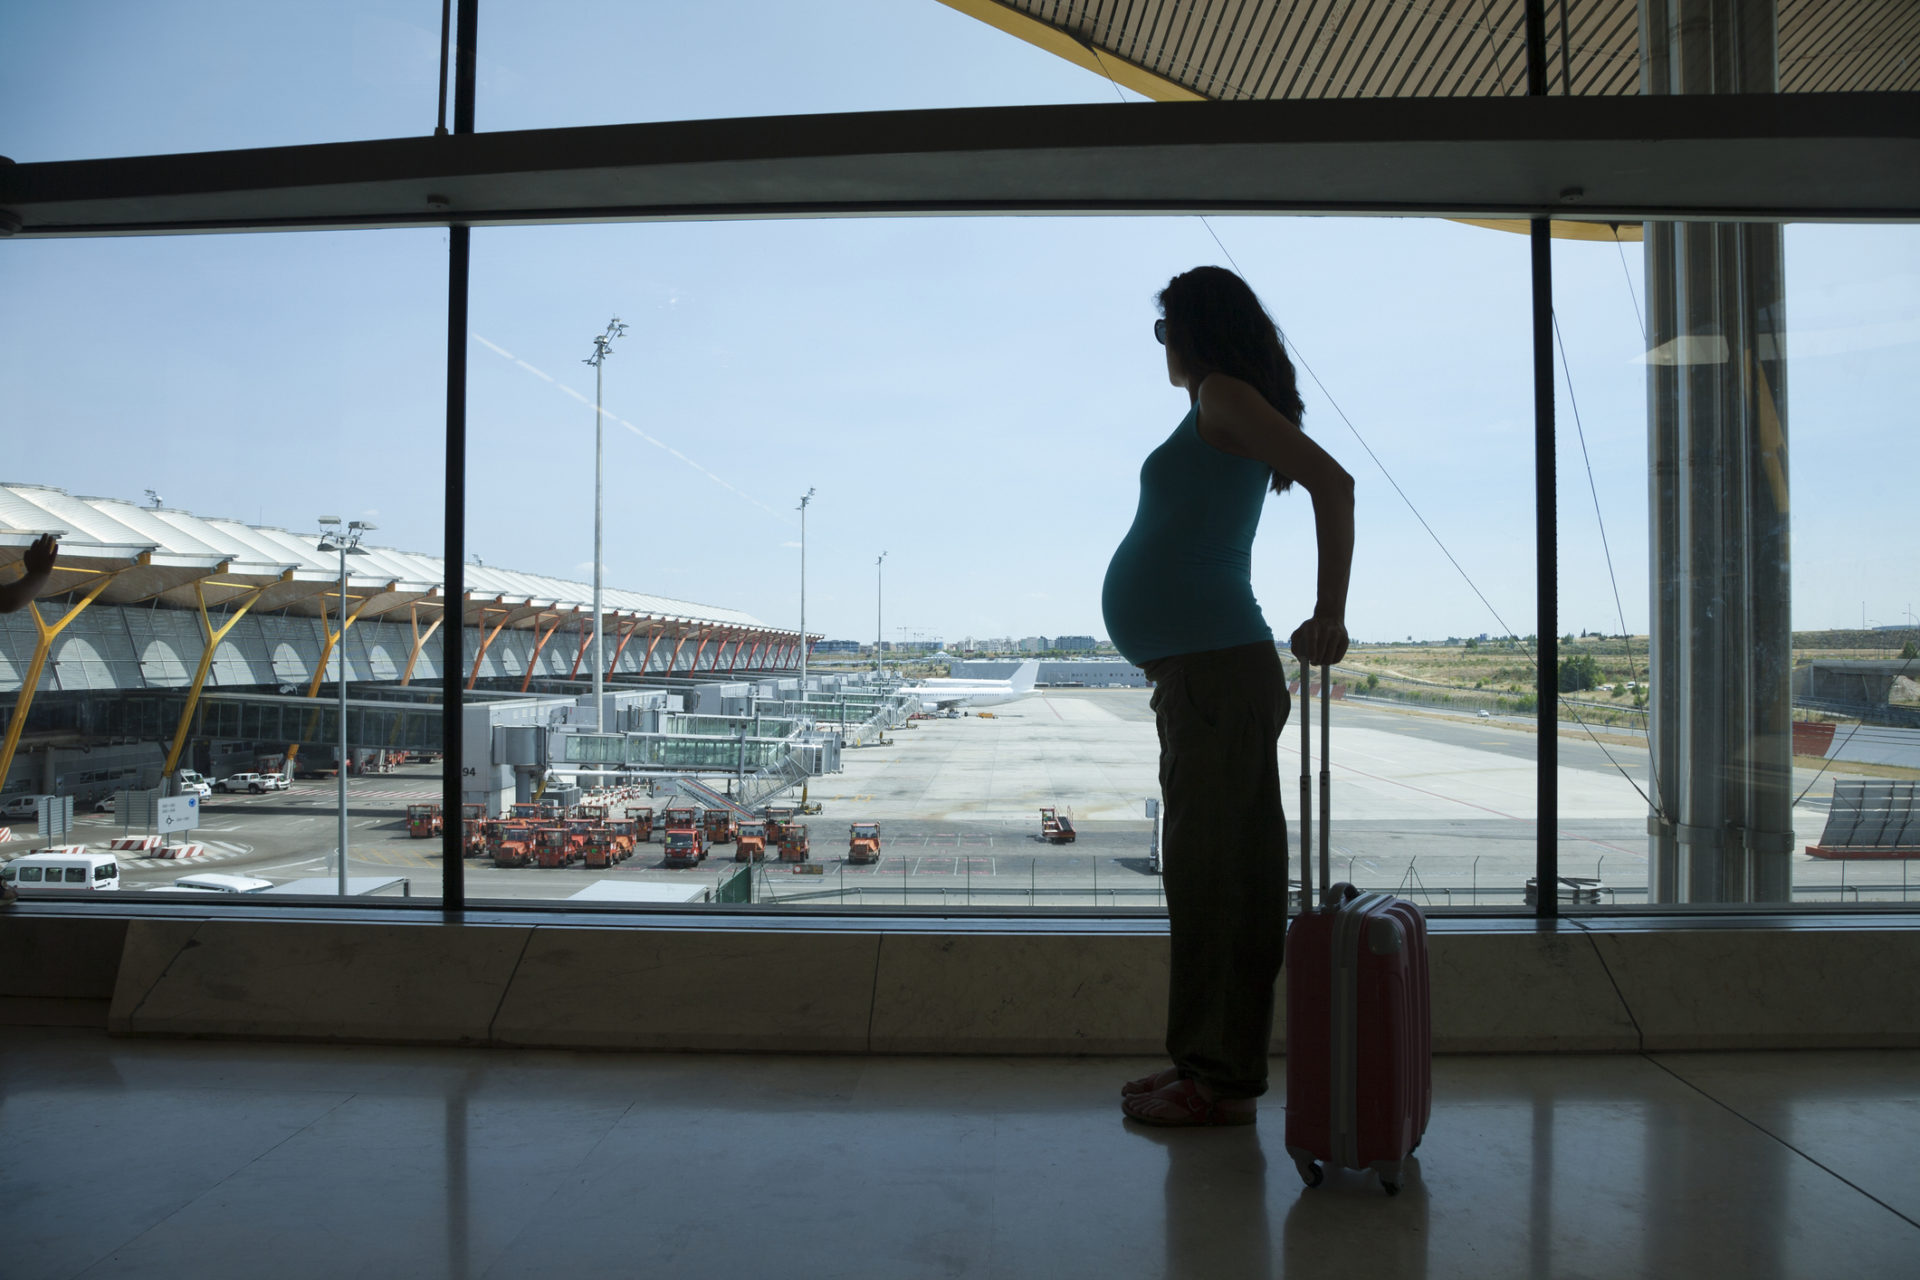 pregnant woman travel on a plane